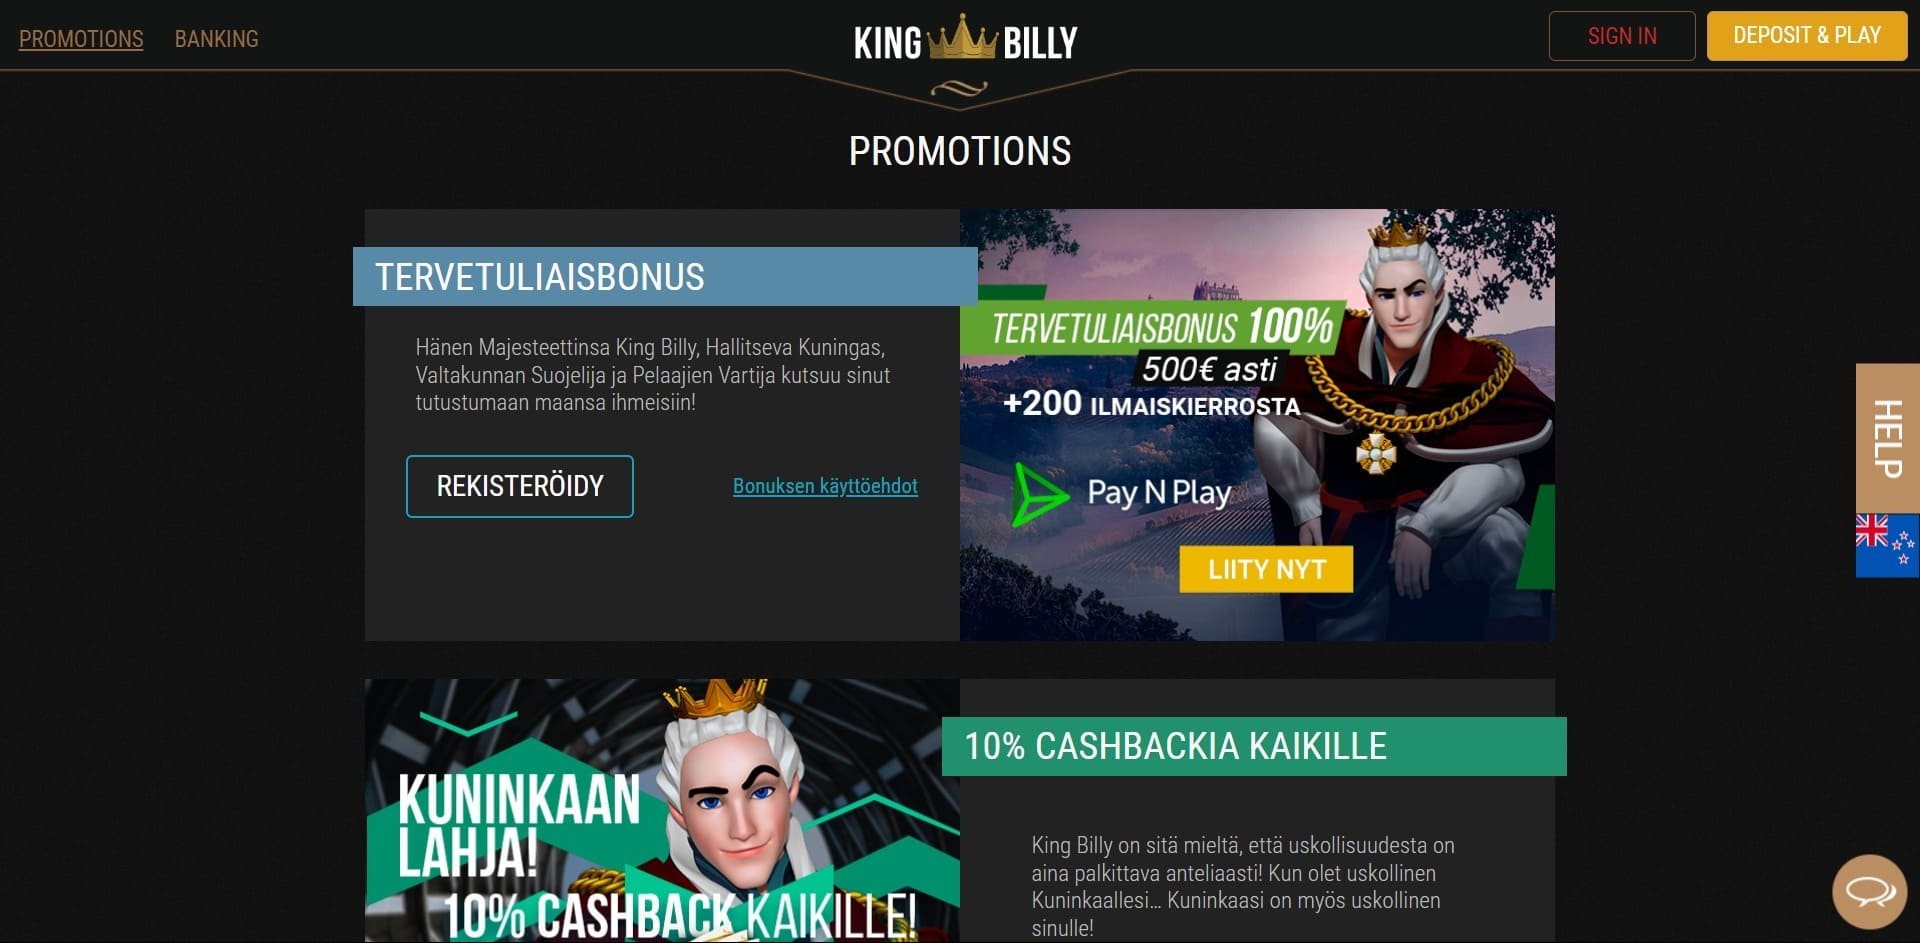 king billy casino bonus codes 2020